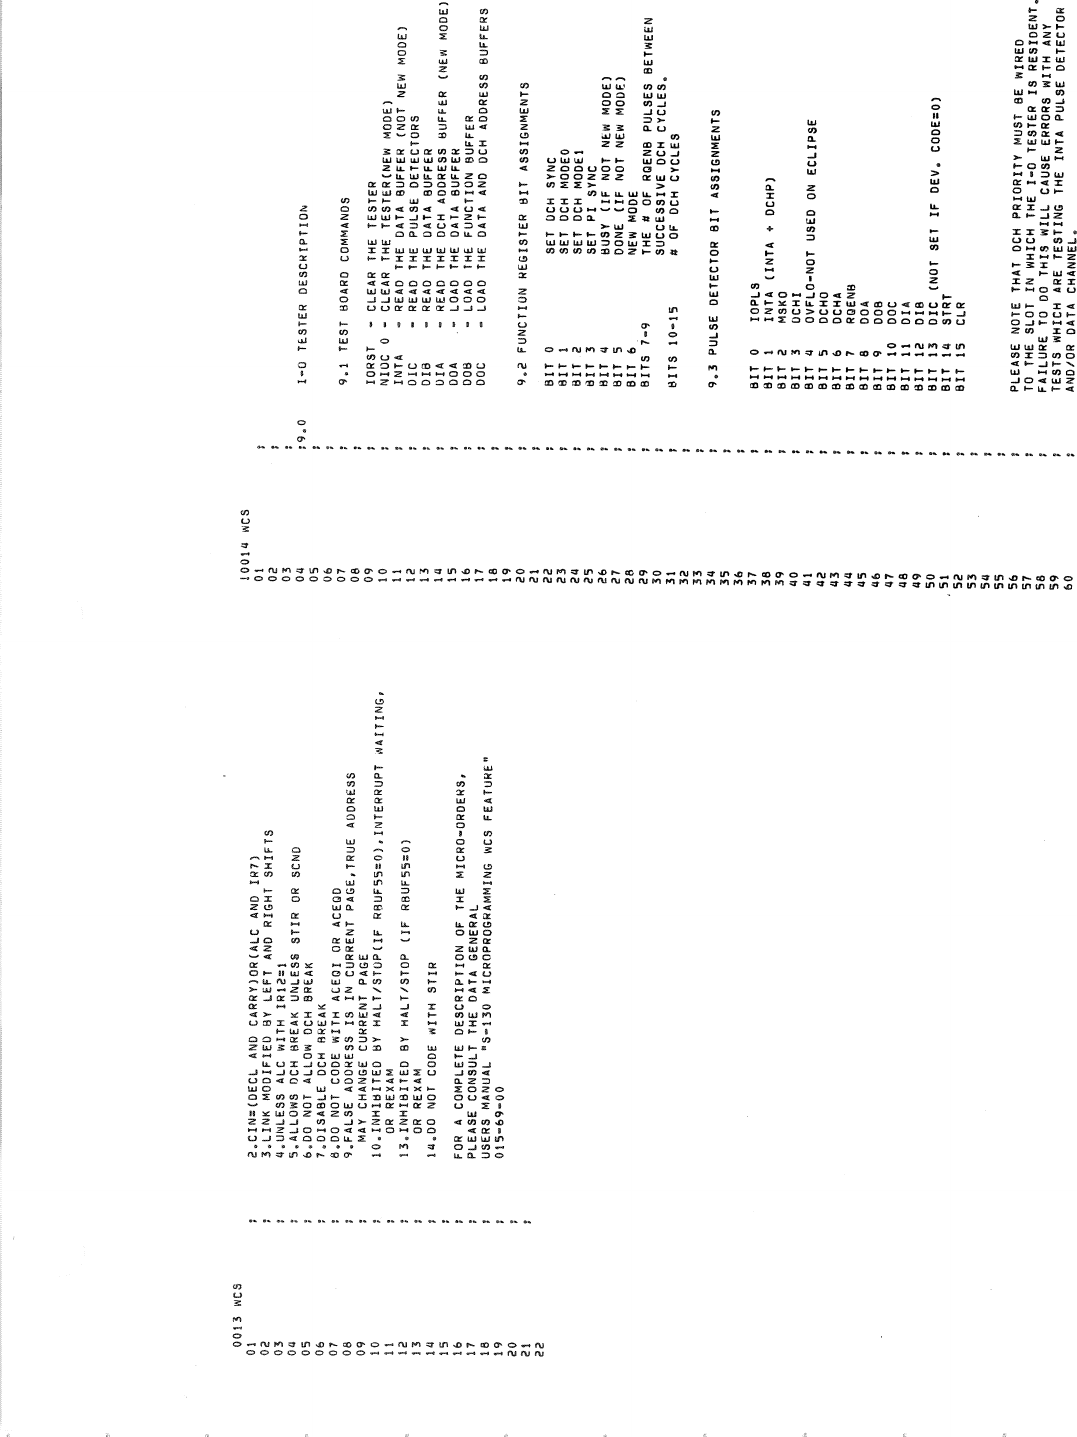 Page 8 of 10 - PDF Printing 600 Dpi 068-000516-01_s-130-writable-control-store-diag-part-4 068-000516-01 S-130-writable-control-store-diag-part-4